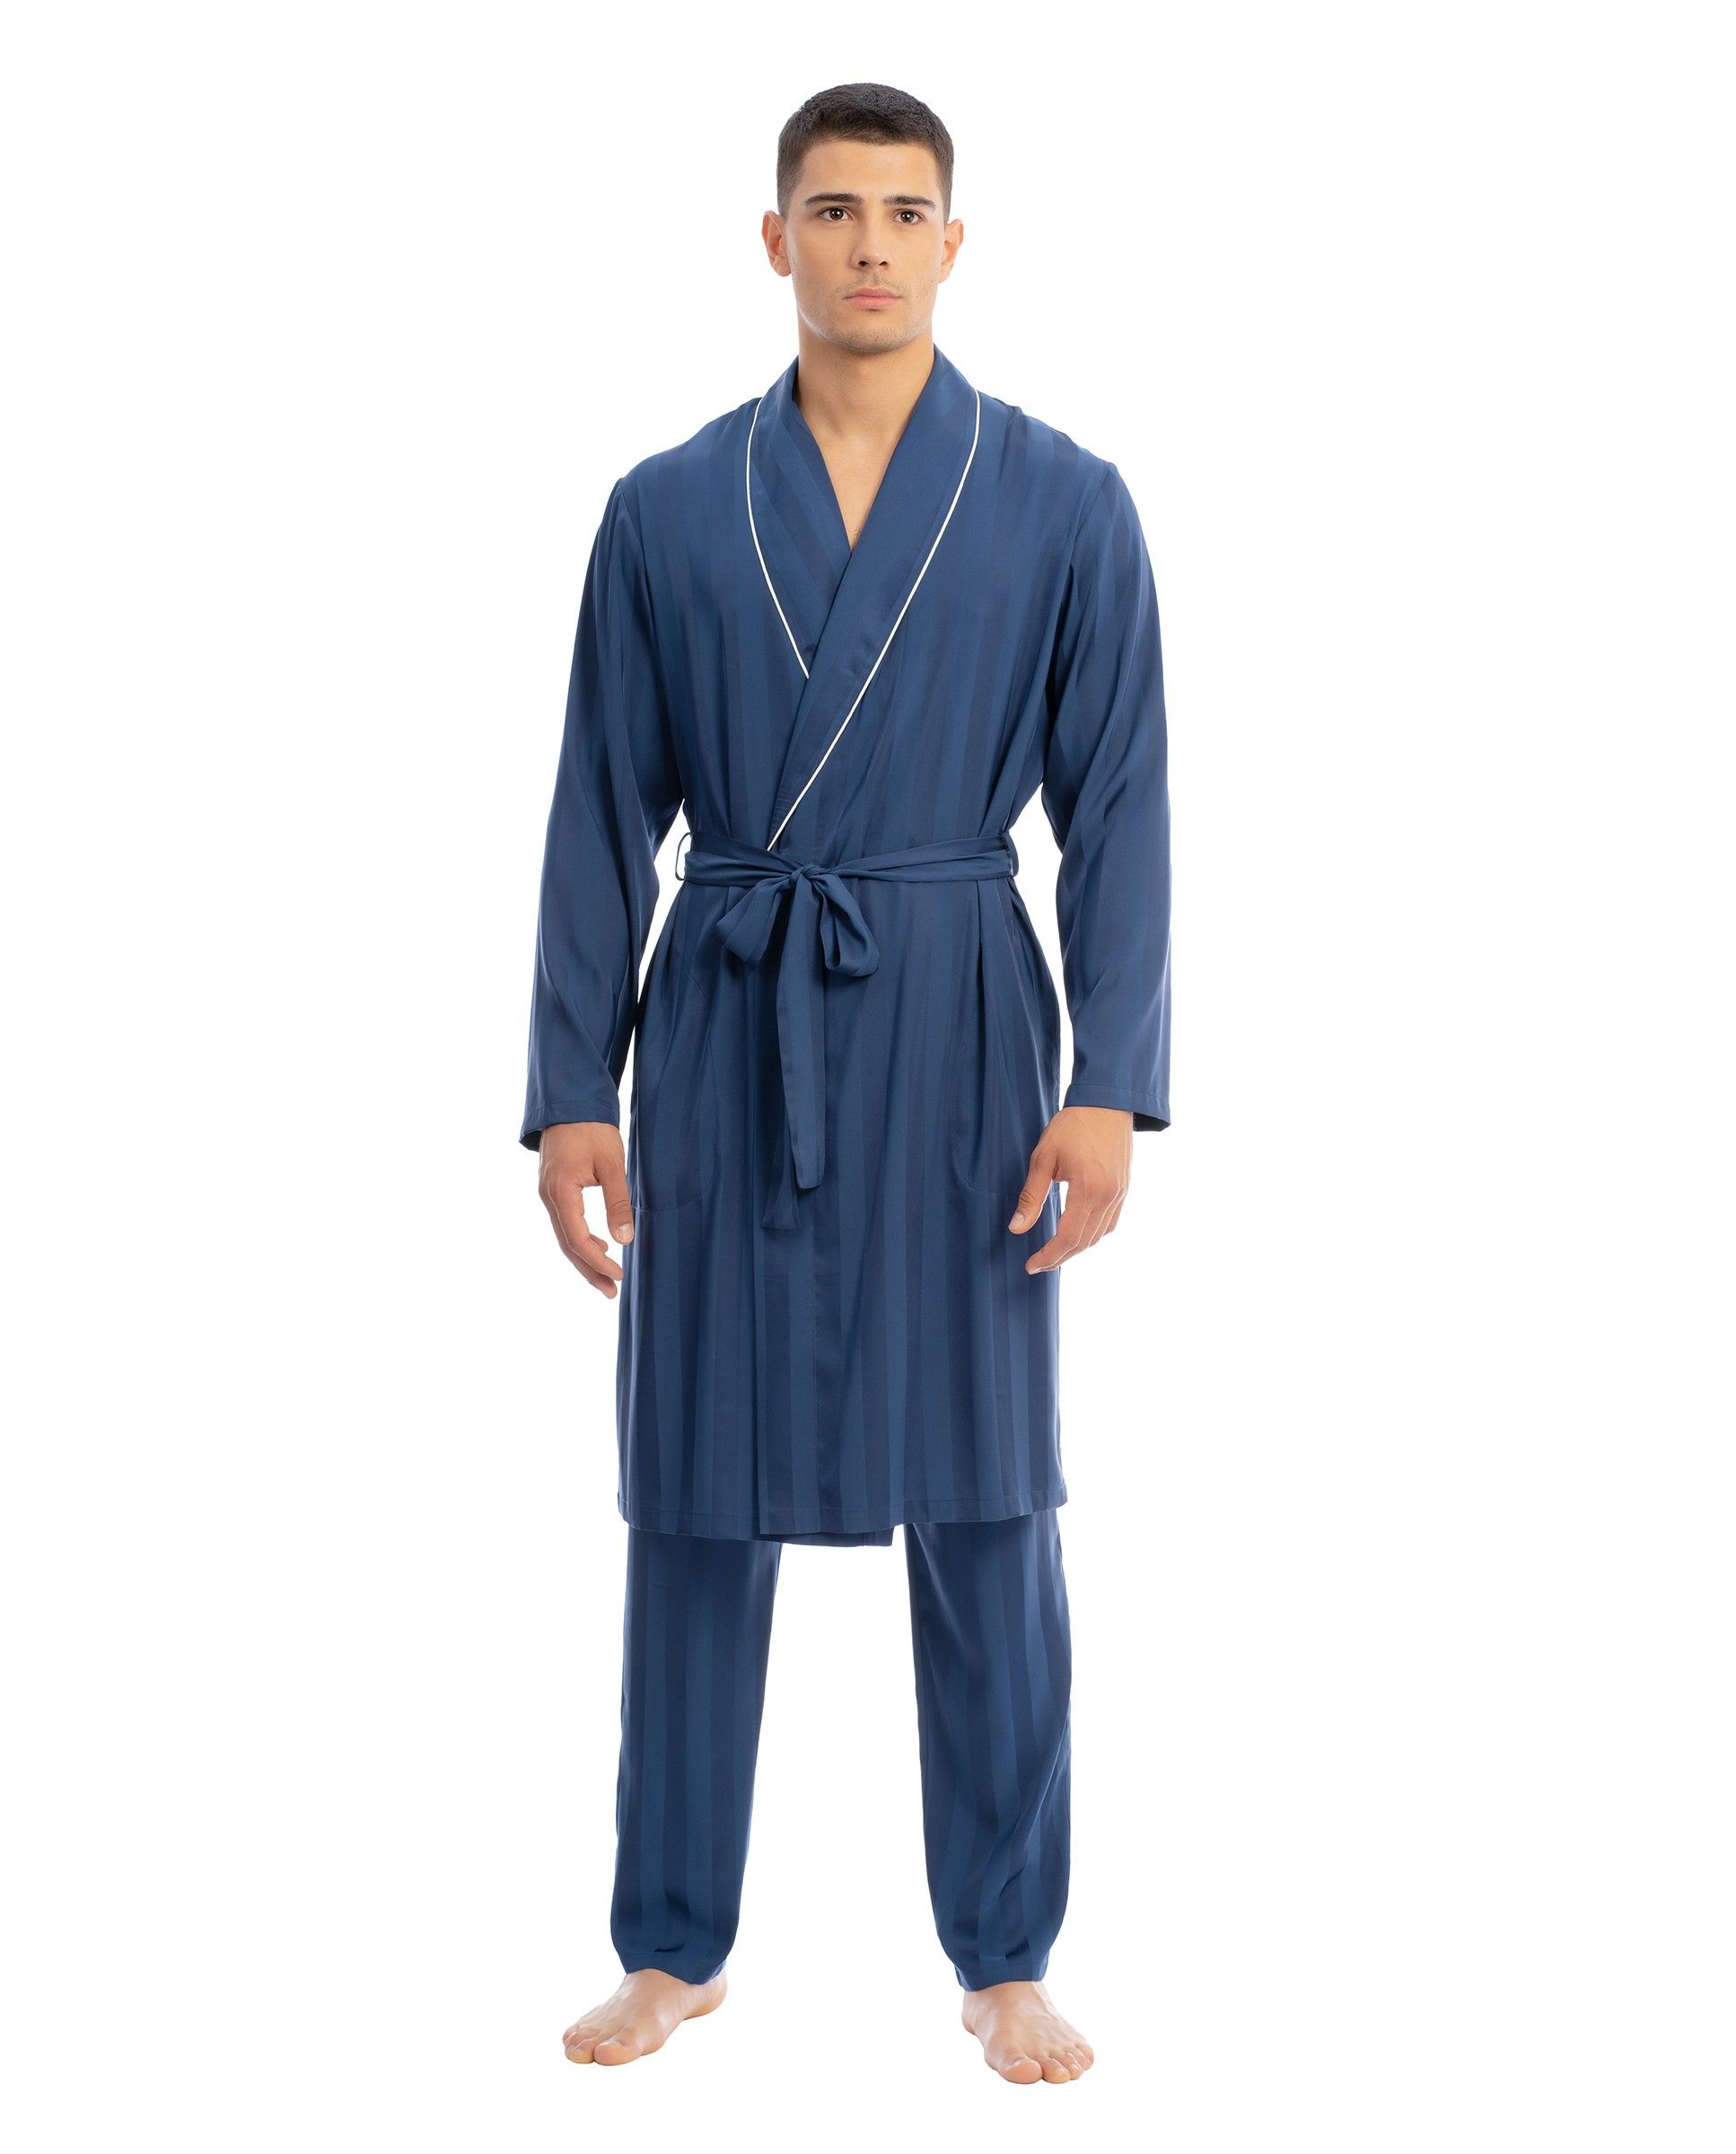 Men's long-sleeved short robe in blue satin jacquard fabric.